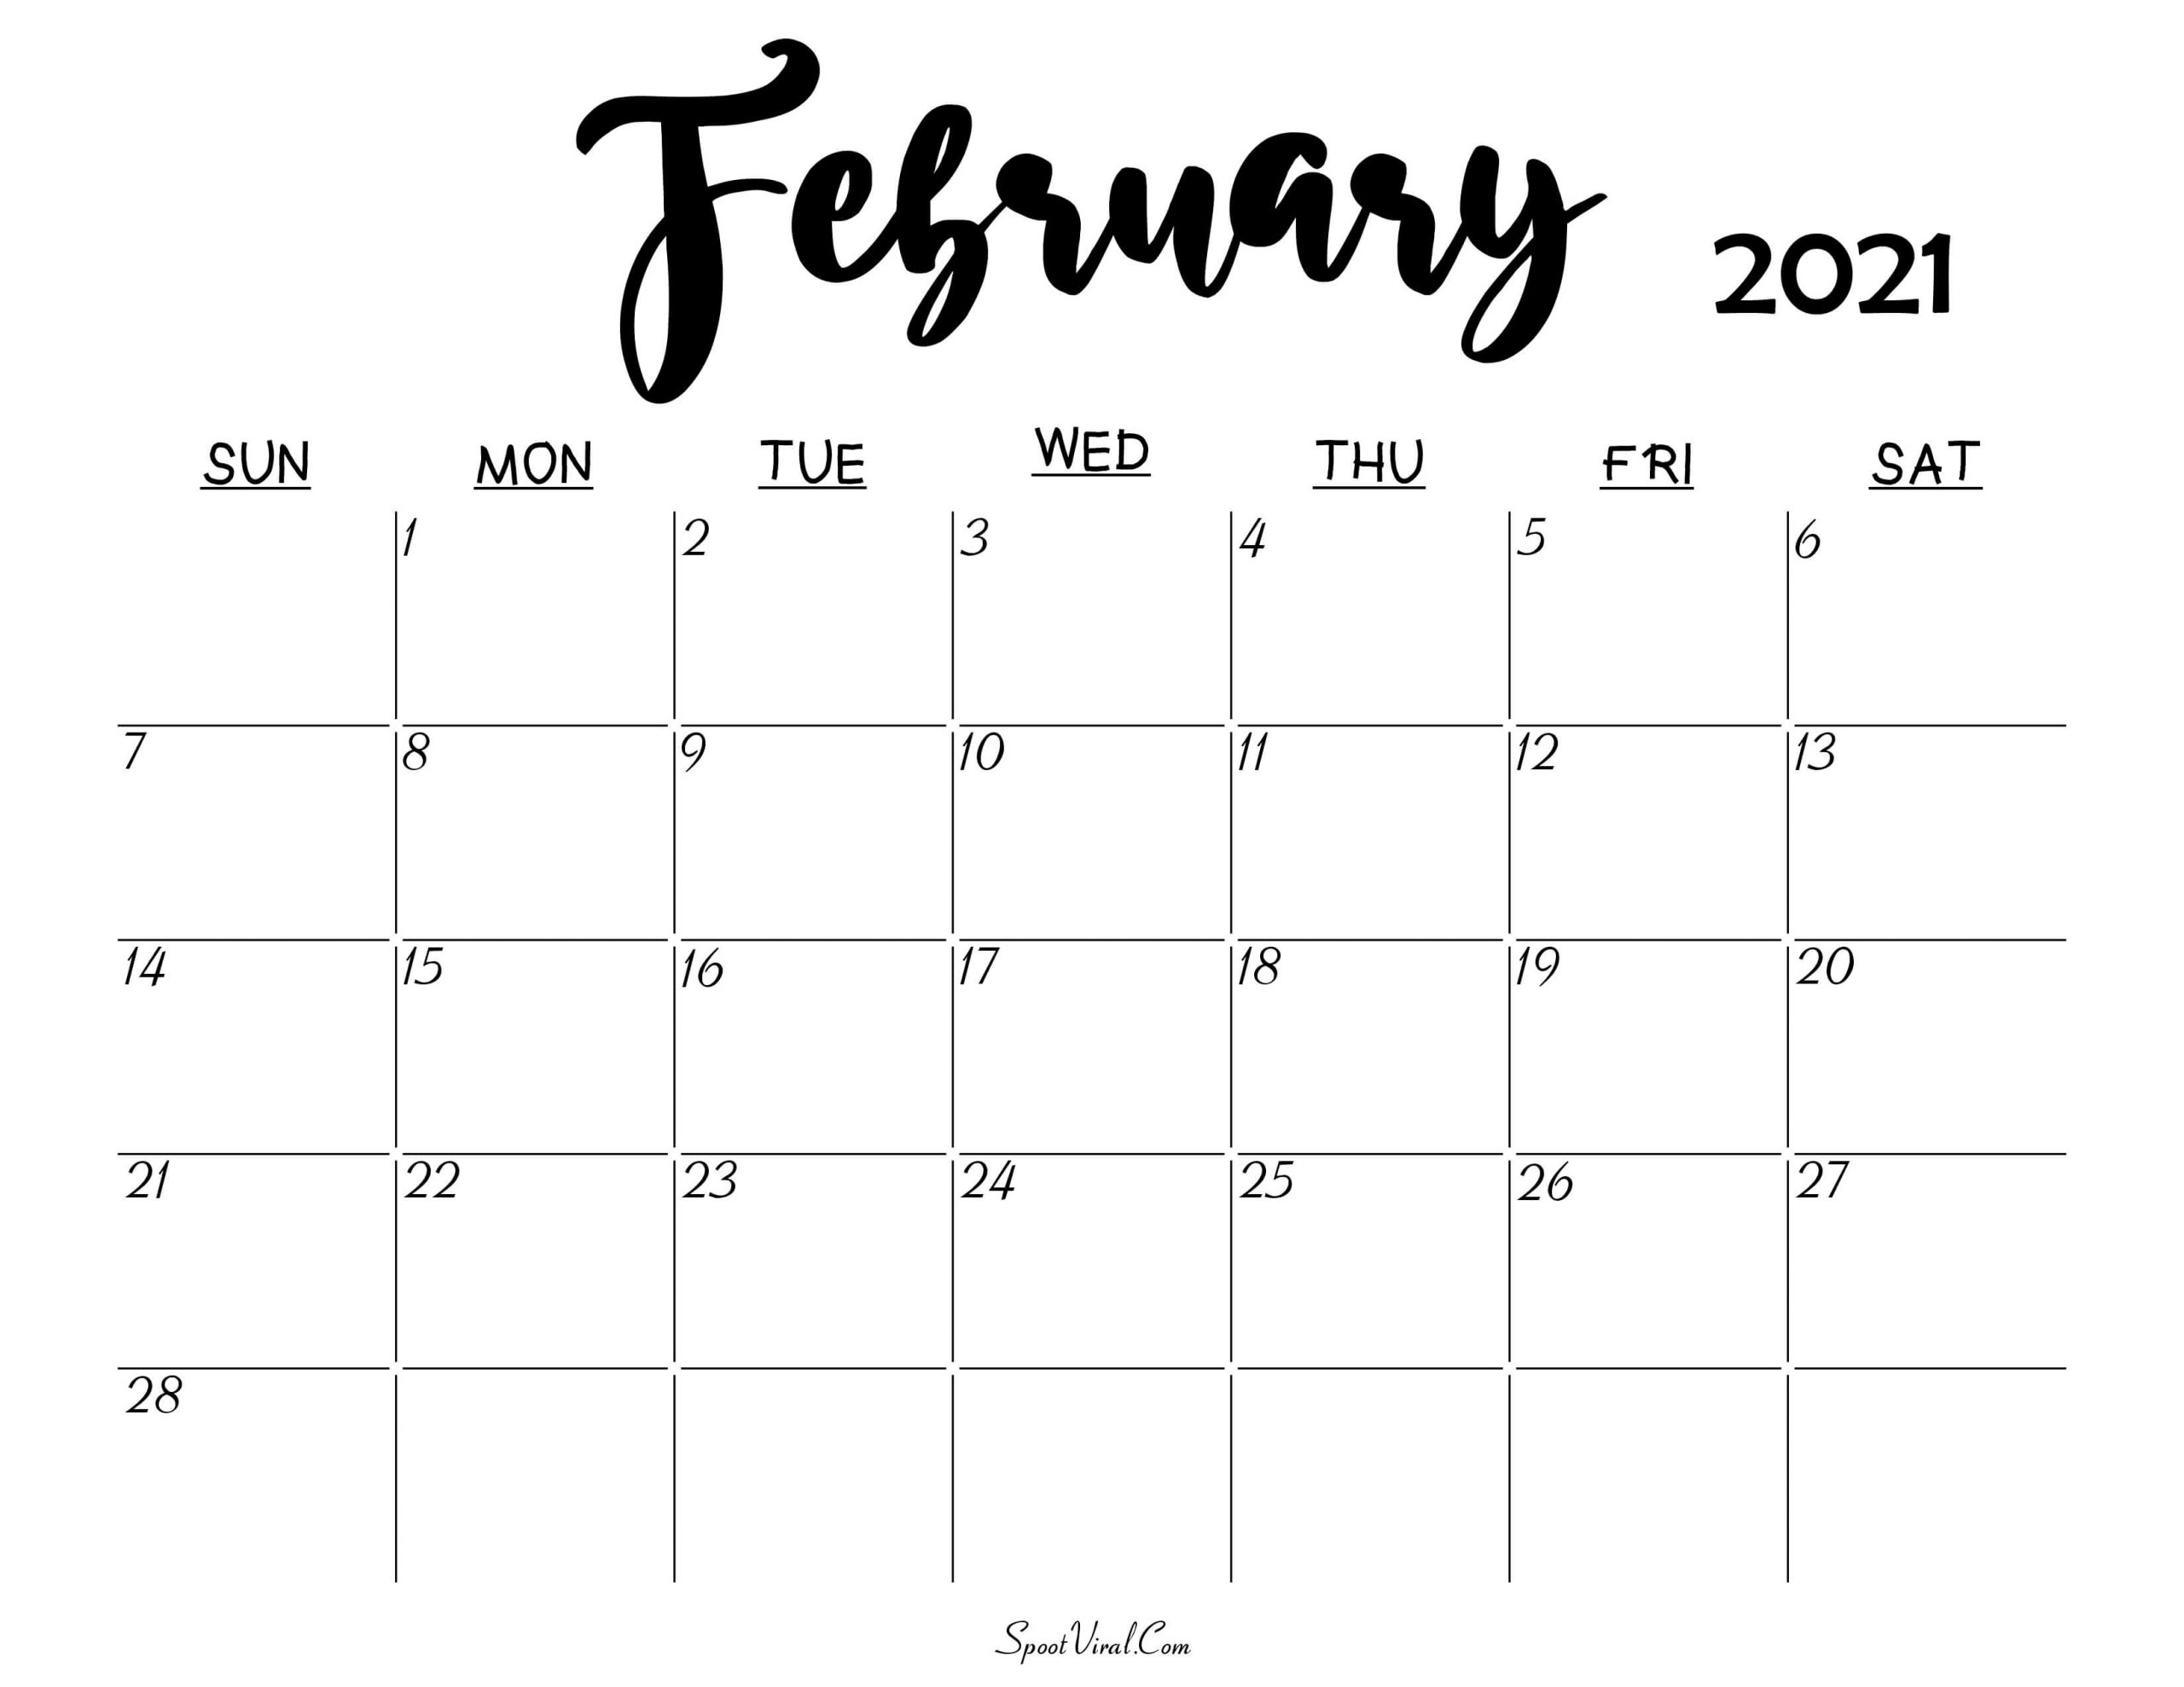 February Calligraphy Calendar / Eps Illustration